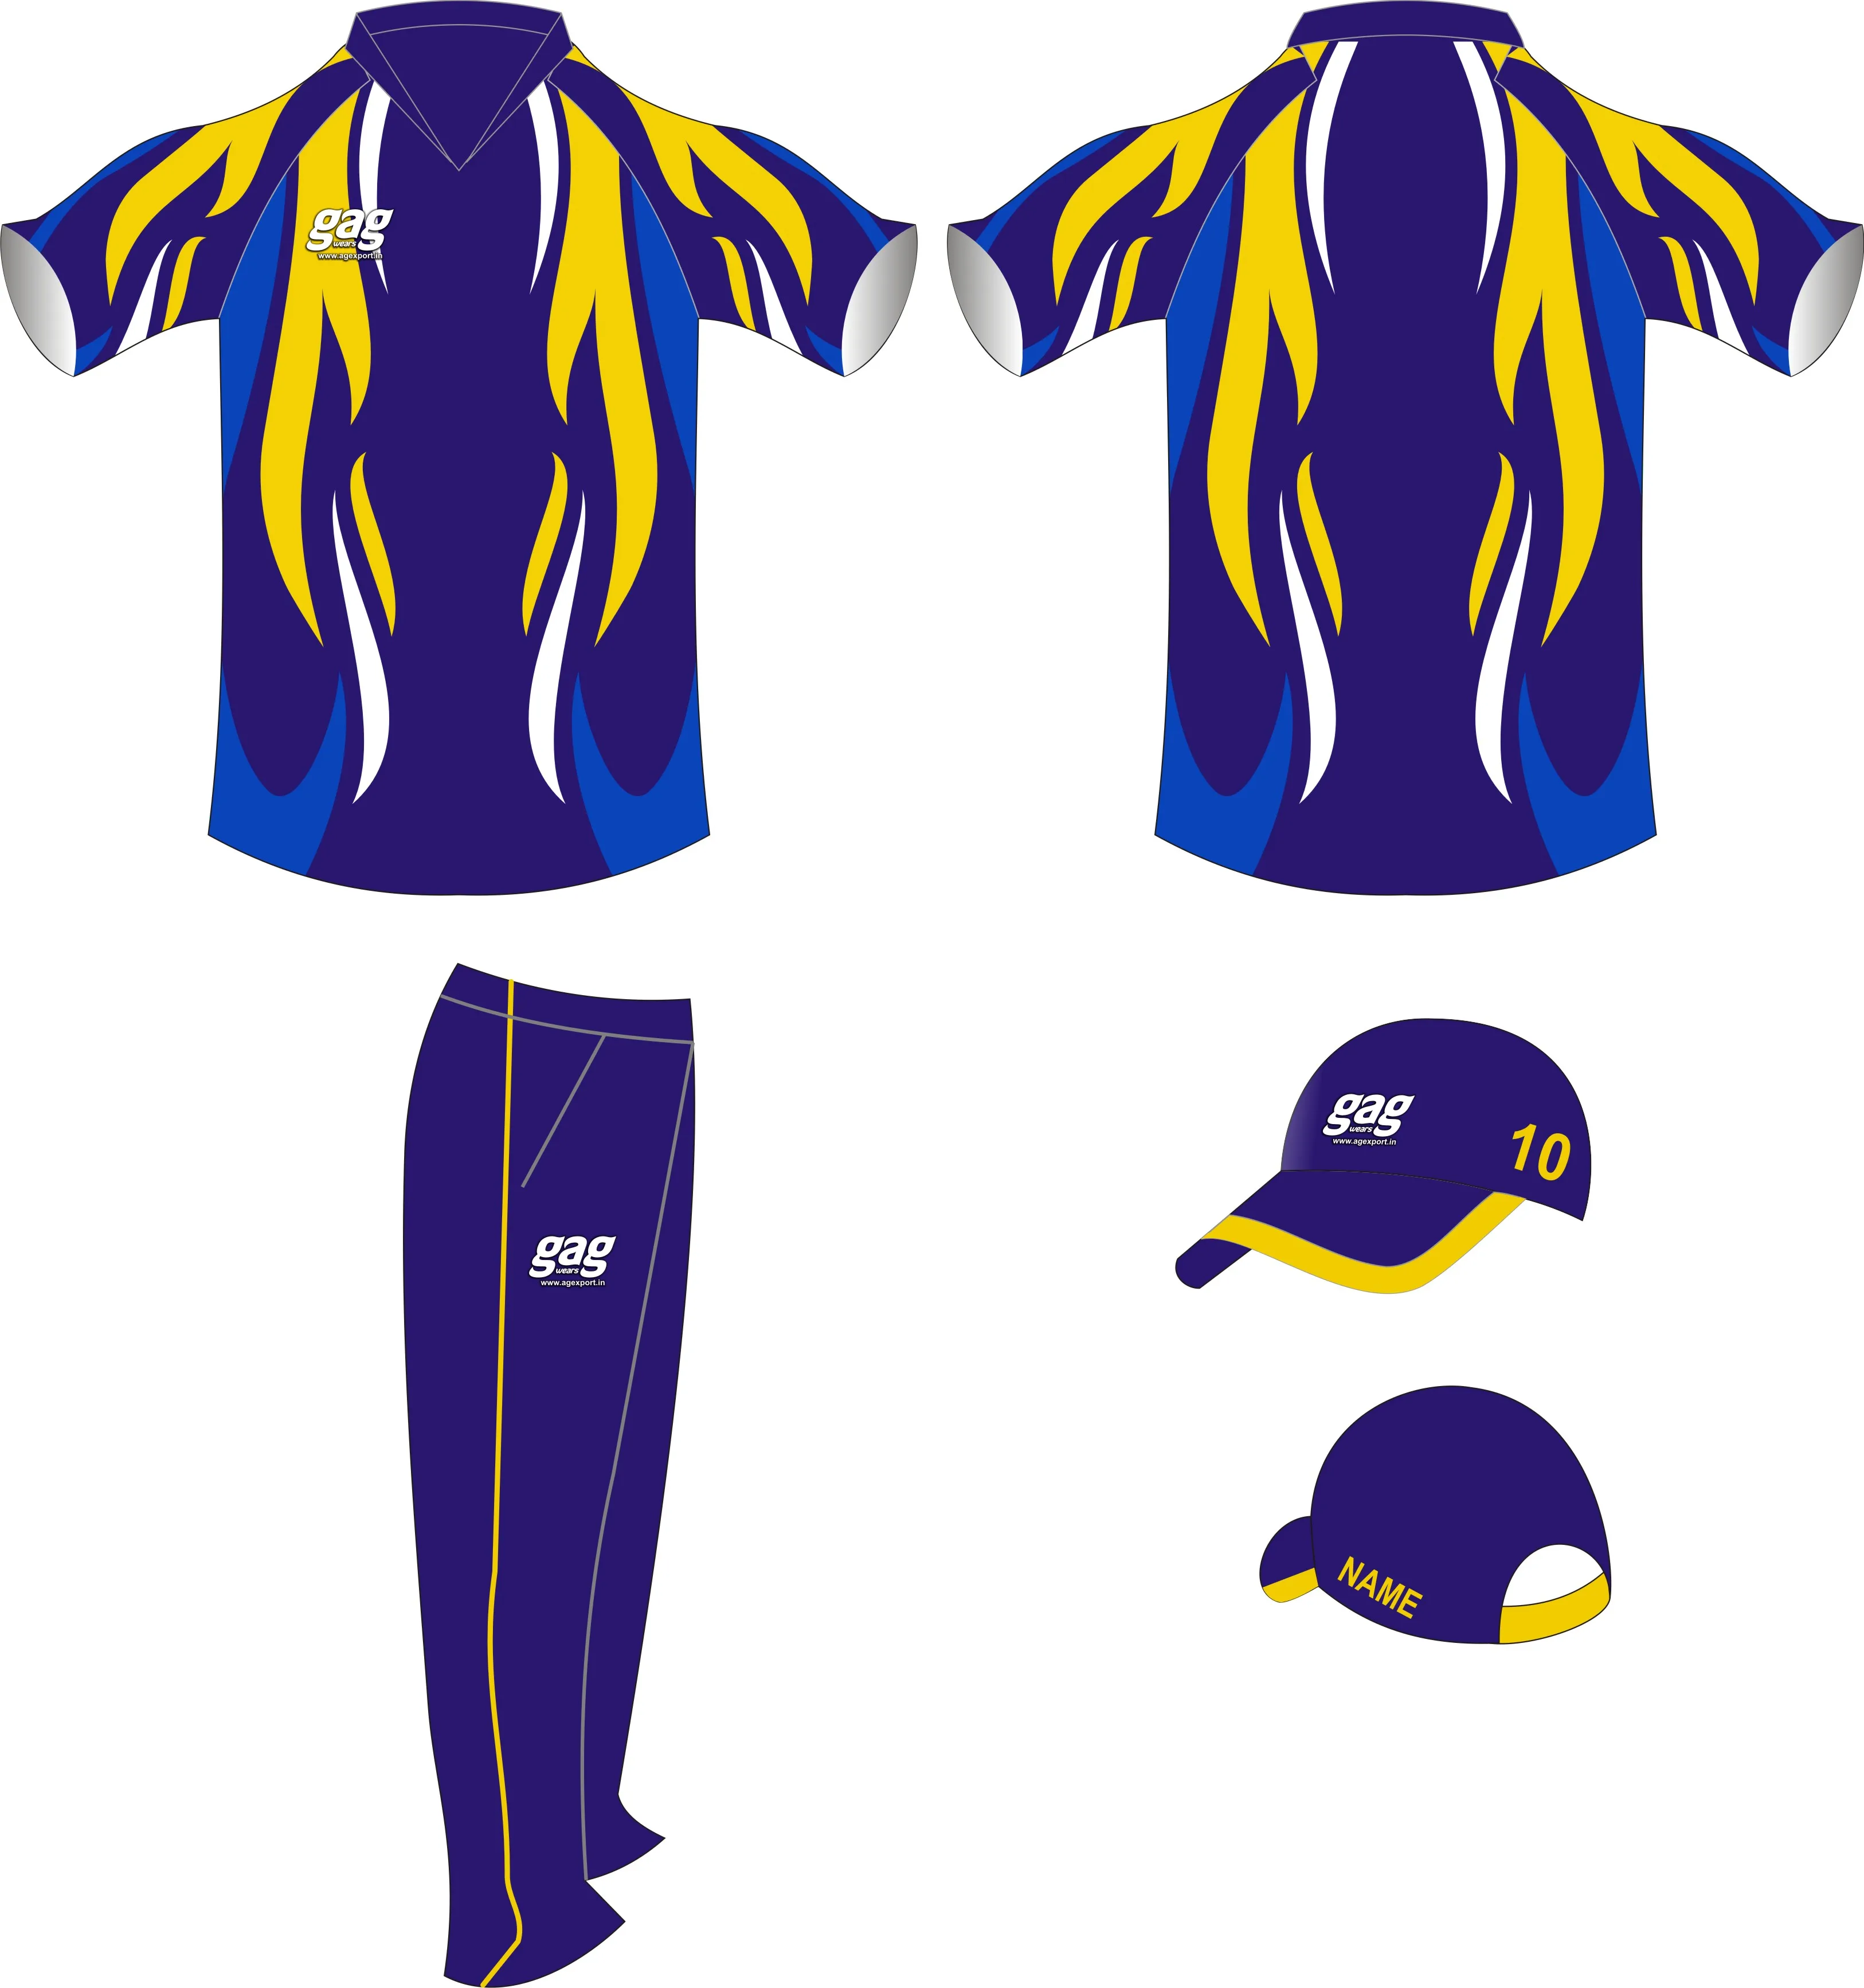 cricket team jerseys for sale